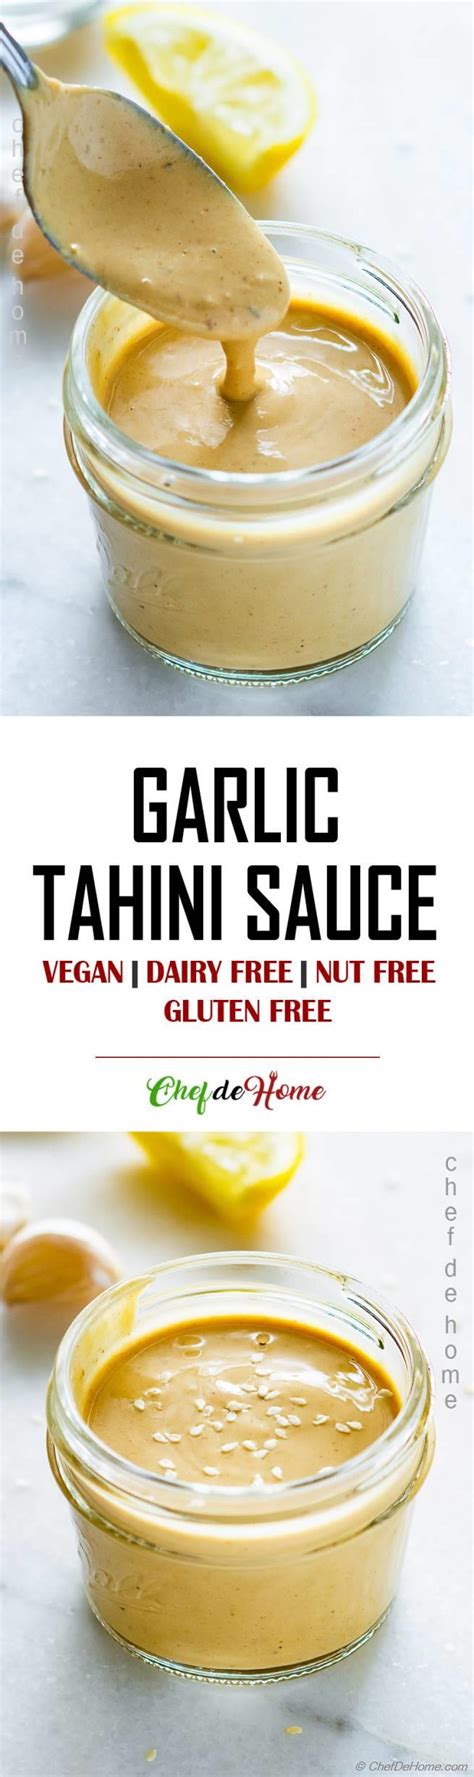 Tahini Sauce Recipe